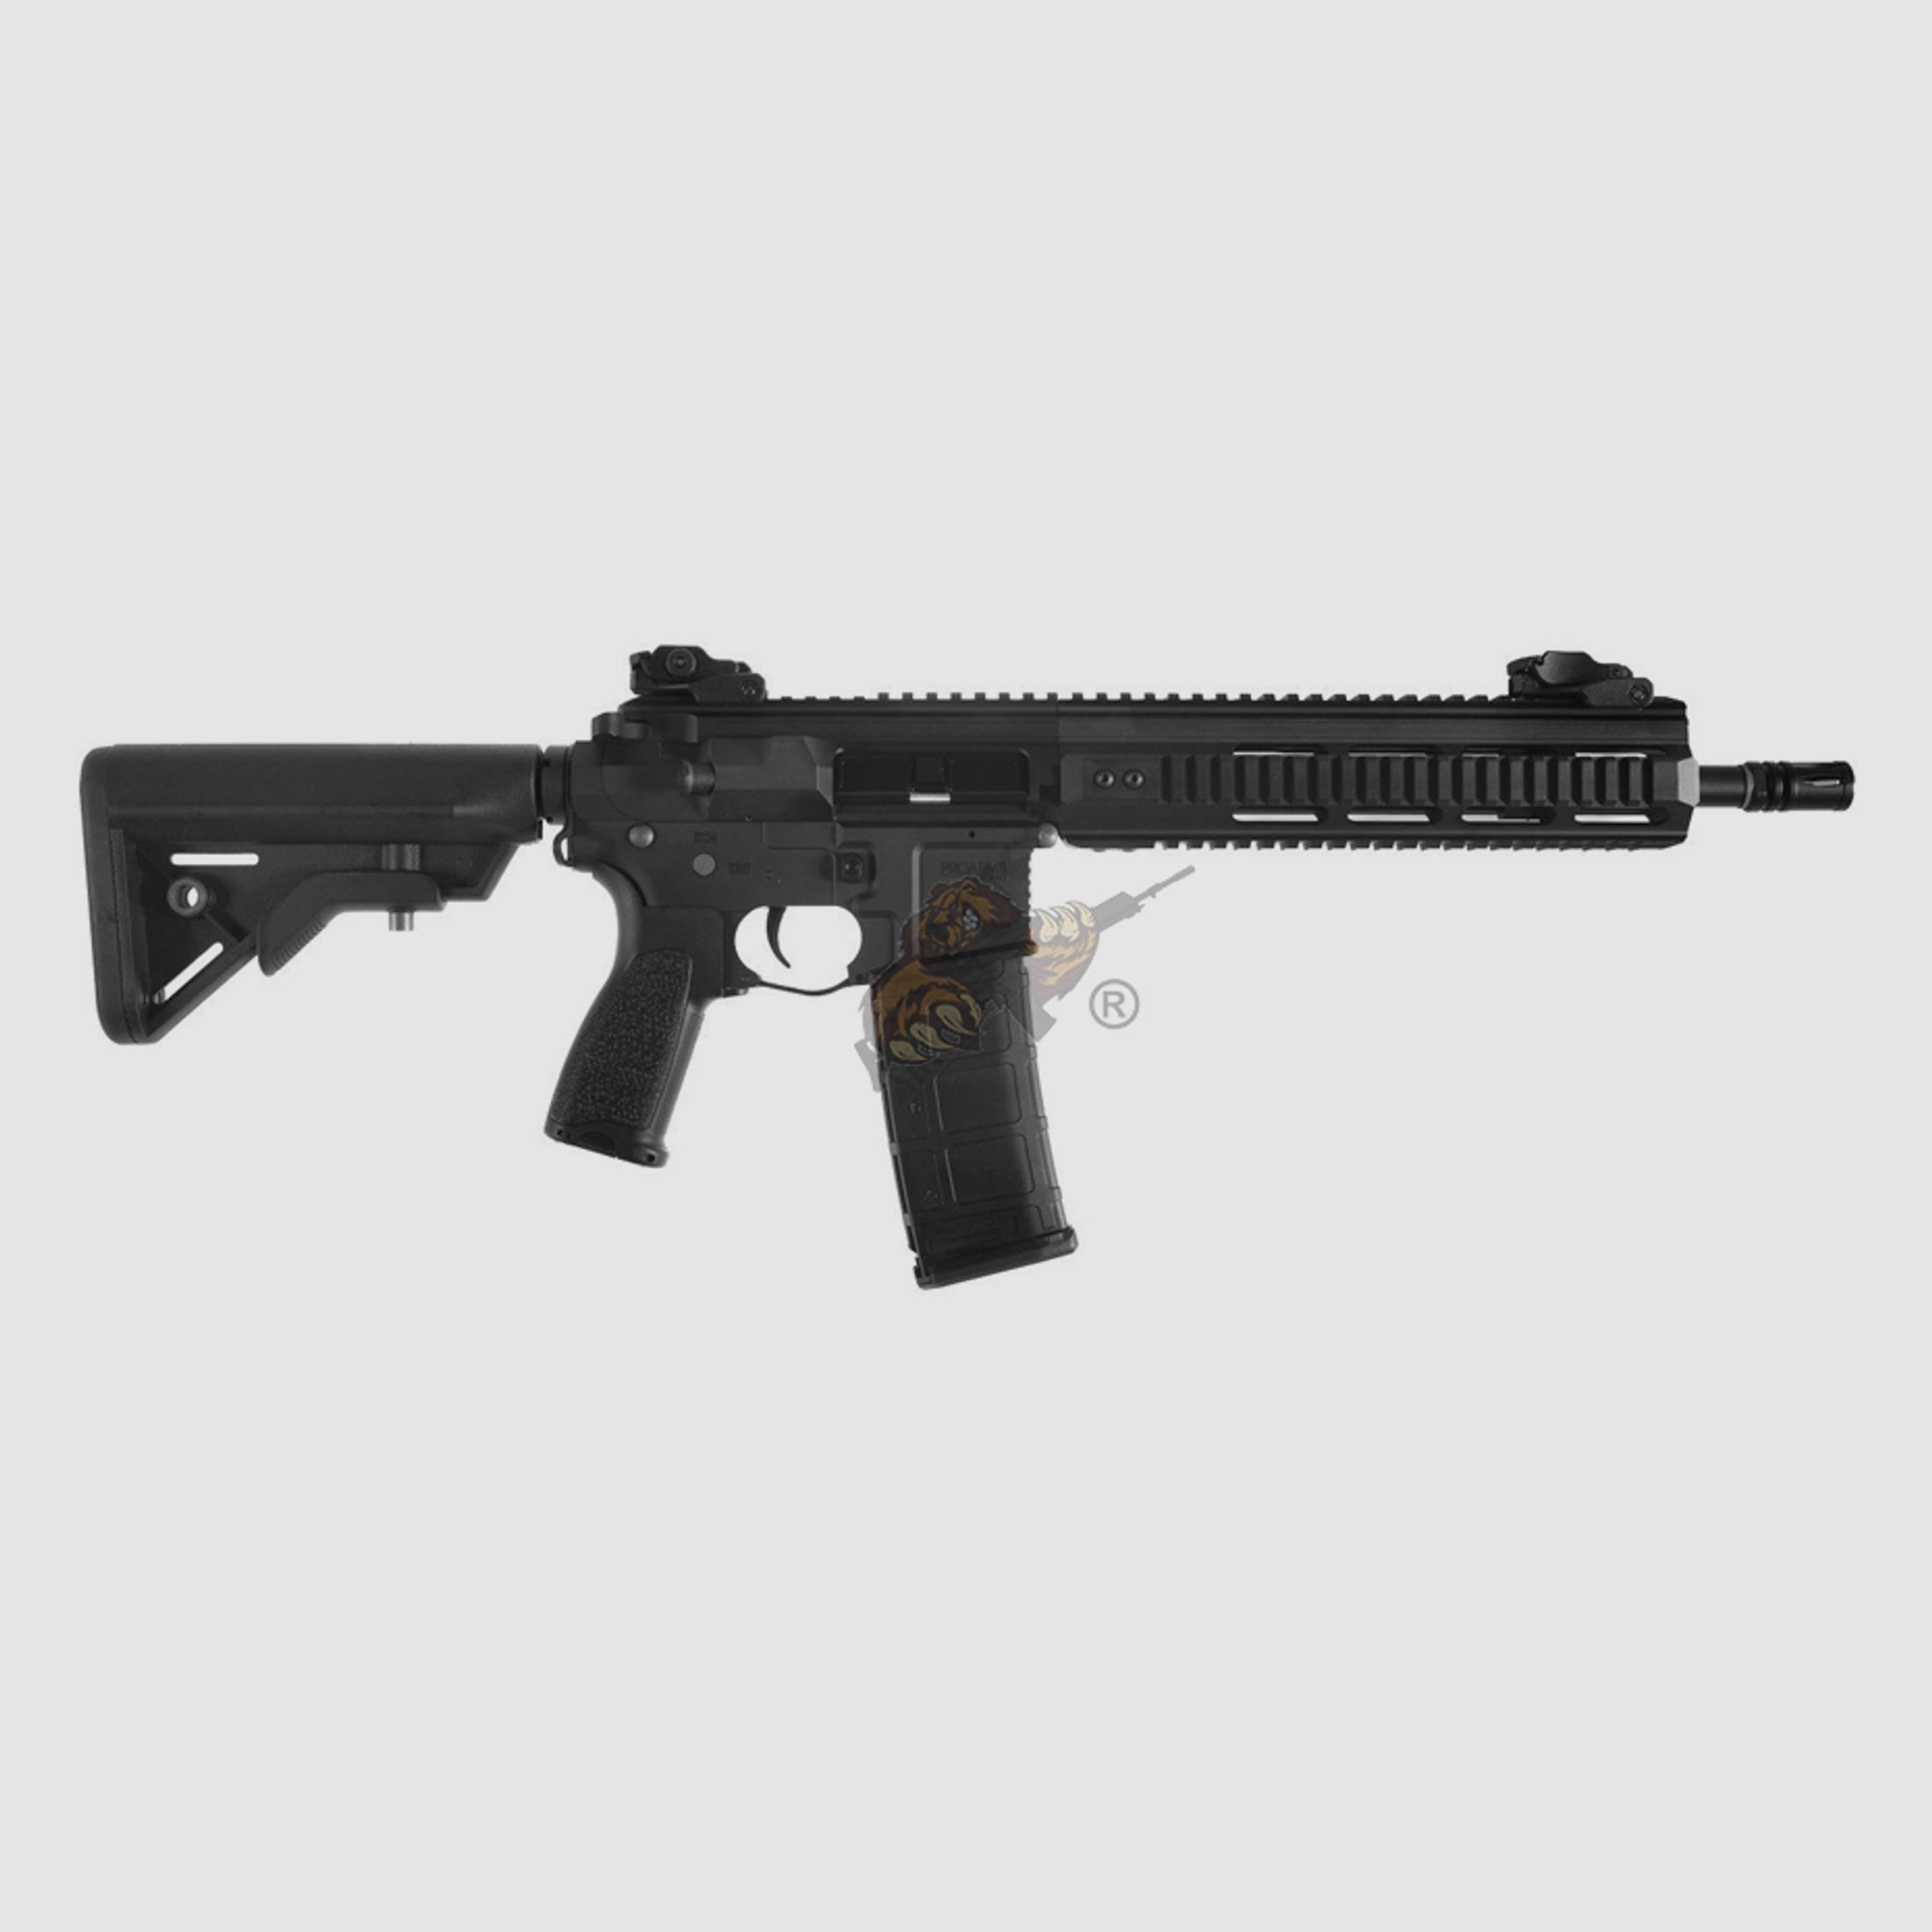 Proarms PAR MK3 12,5inch Full Metal (Schwarz) max. 0,5J Delta Armory